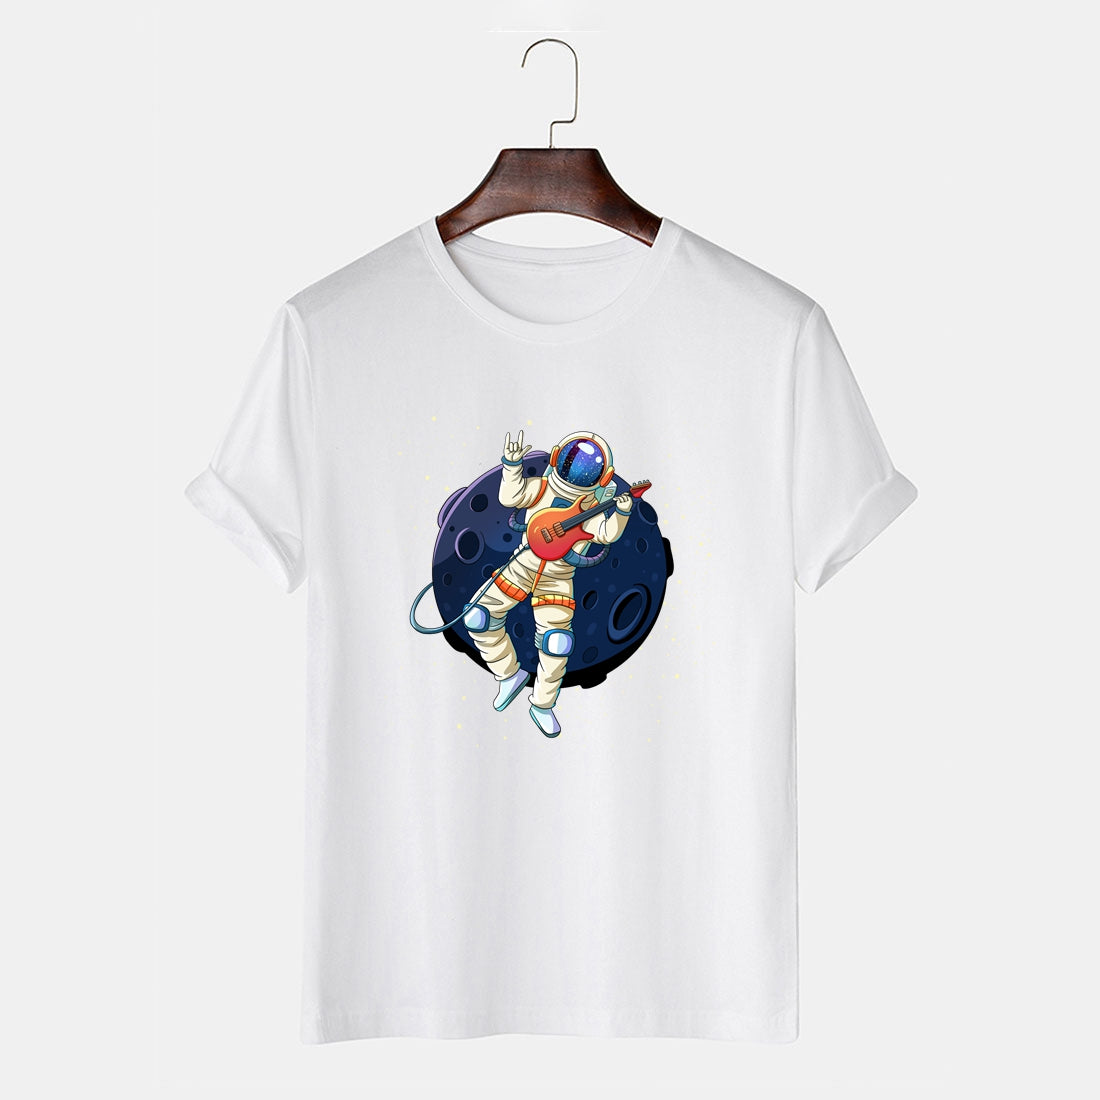 Astronaut T Shirt for Men Astronaut Play Guitar Graphic Print Tee Cotton Tops